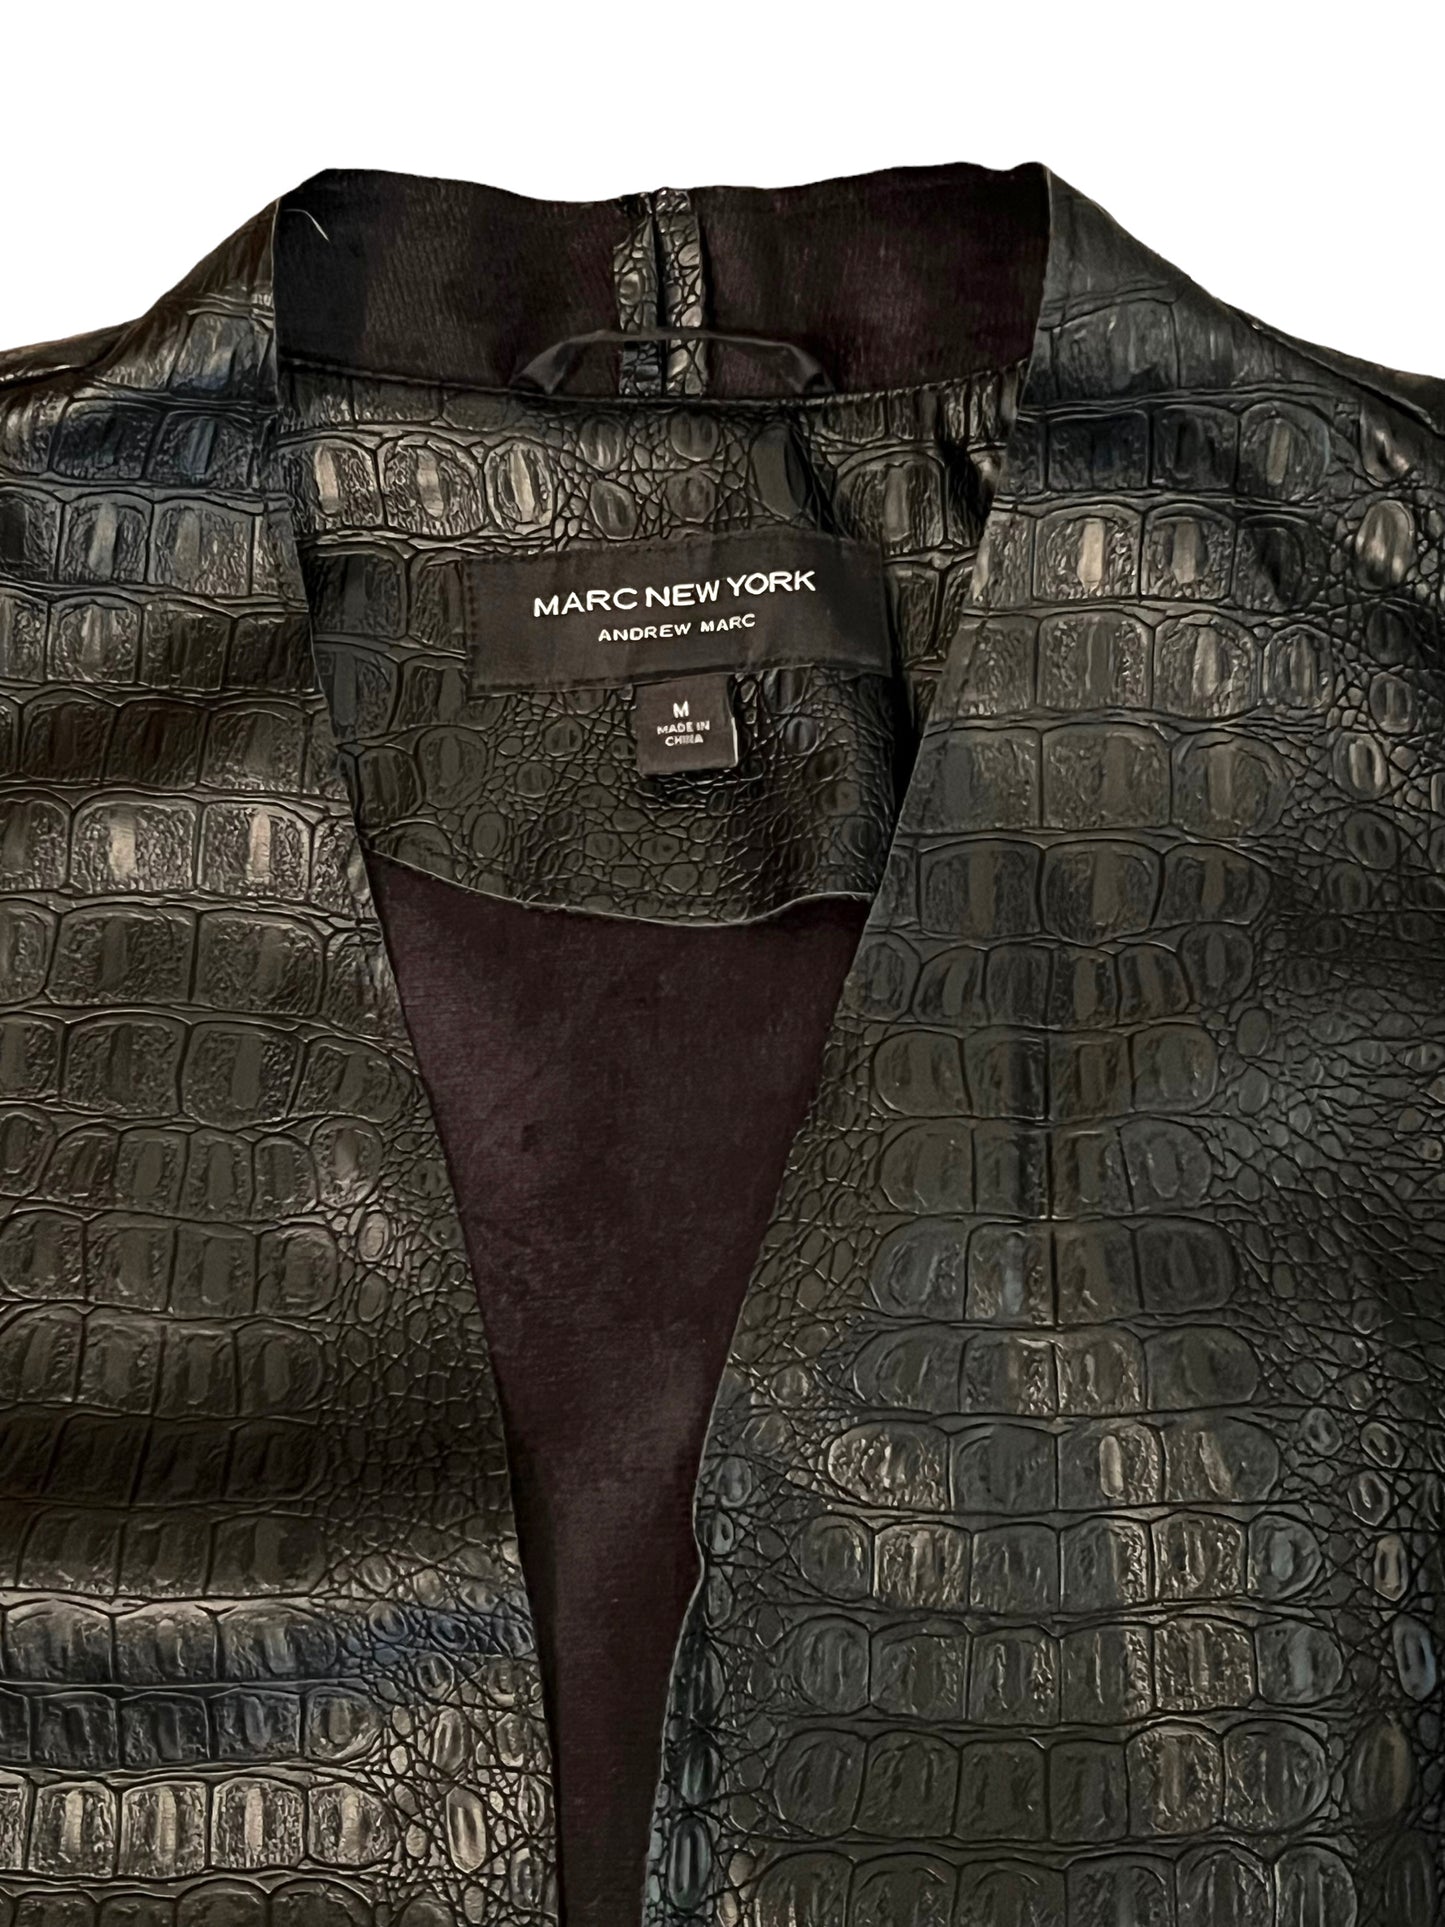 Marc New York Black Croc Embossed Vegan Leather Size M Jacket